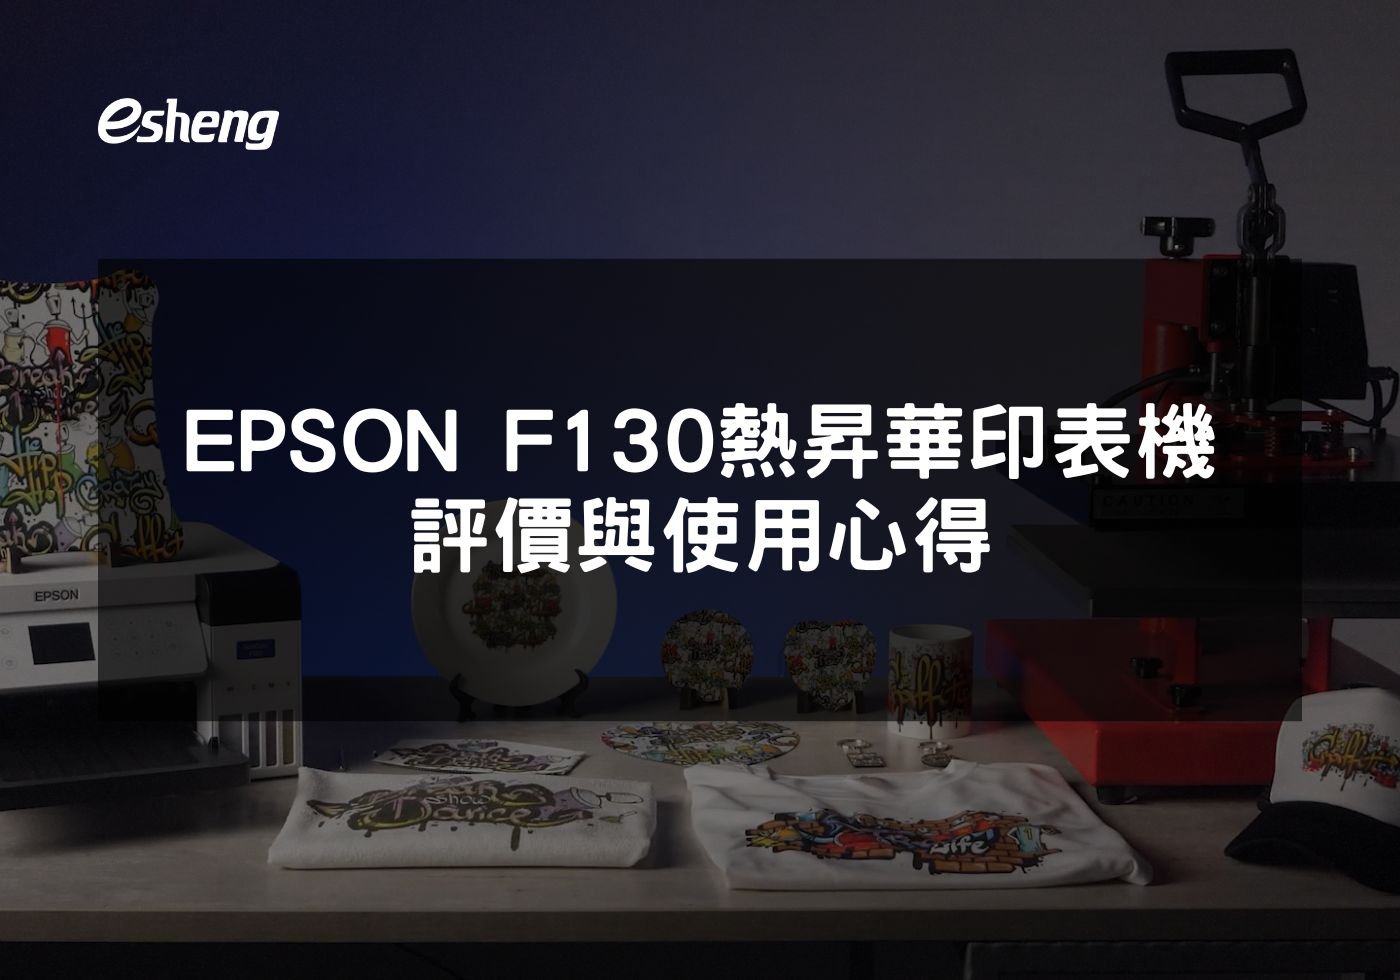 EPSON F130熱昇華印表機評價與使用心得